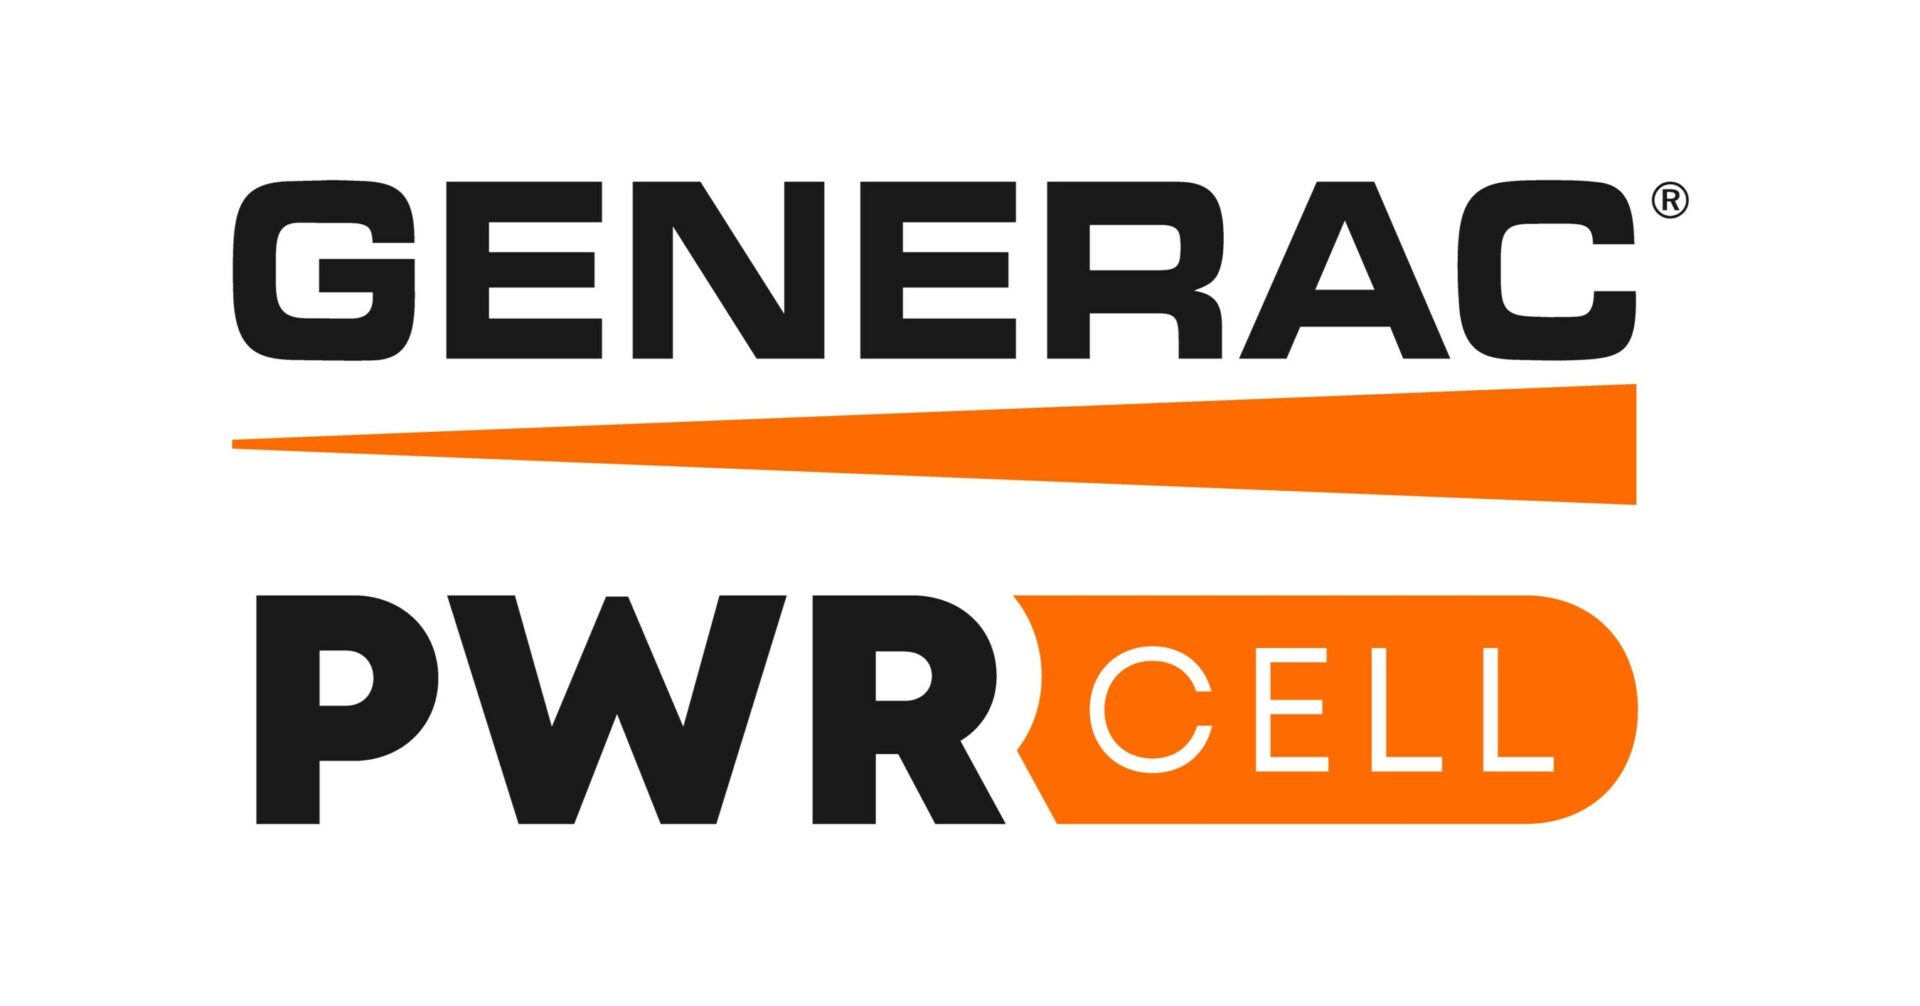 Generac PWRcell